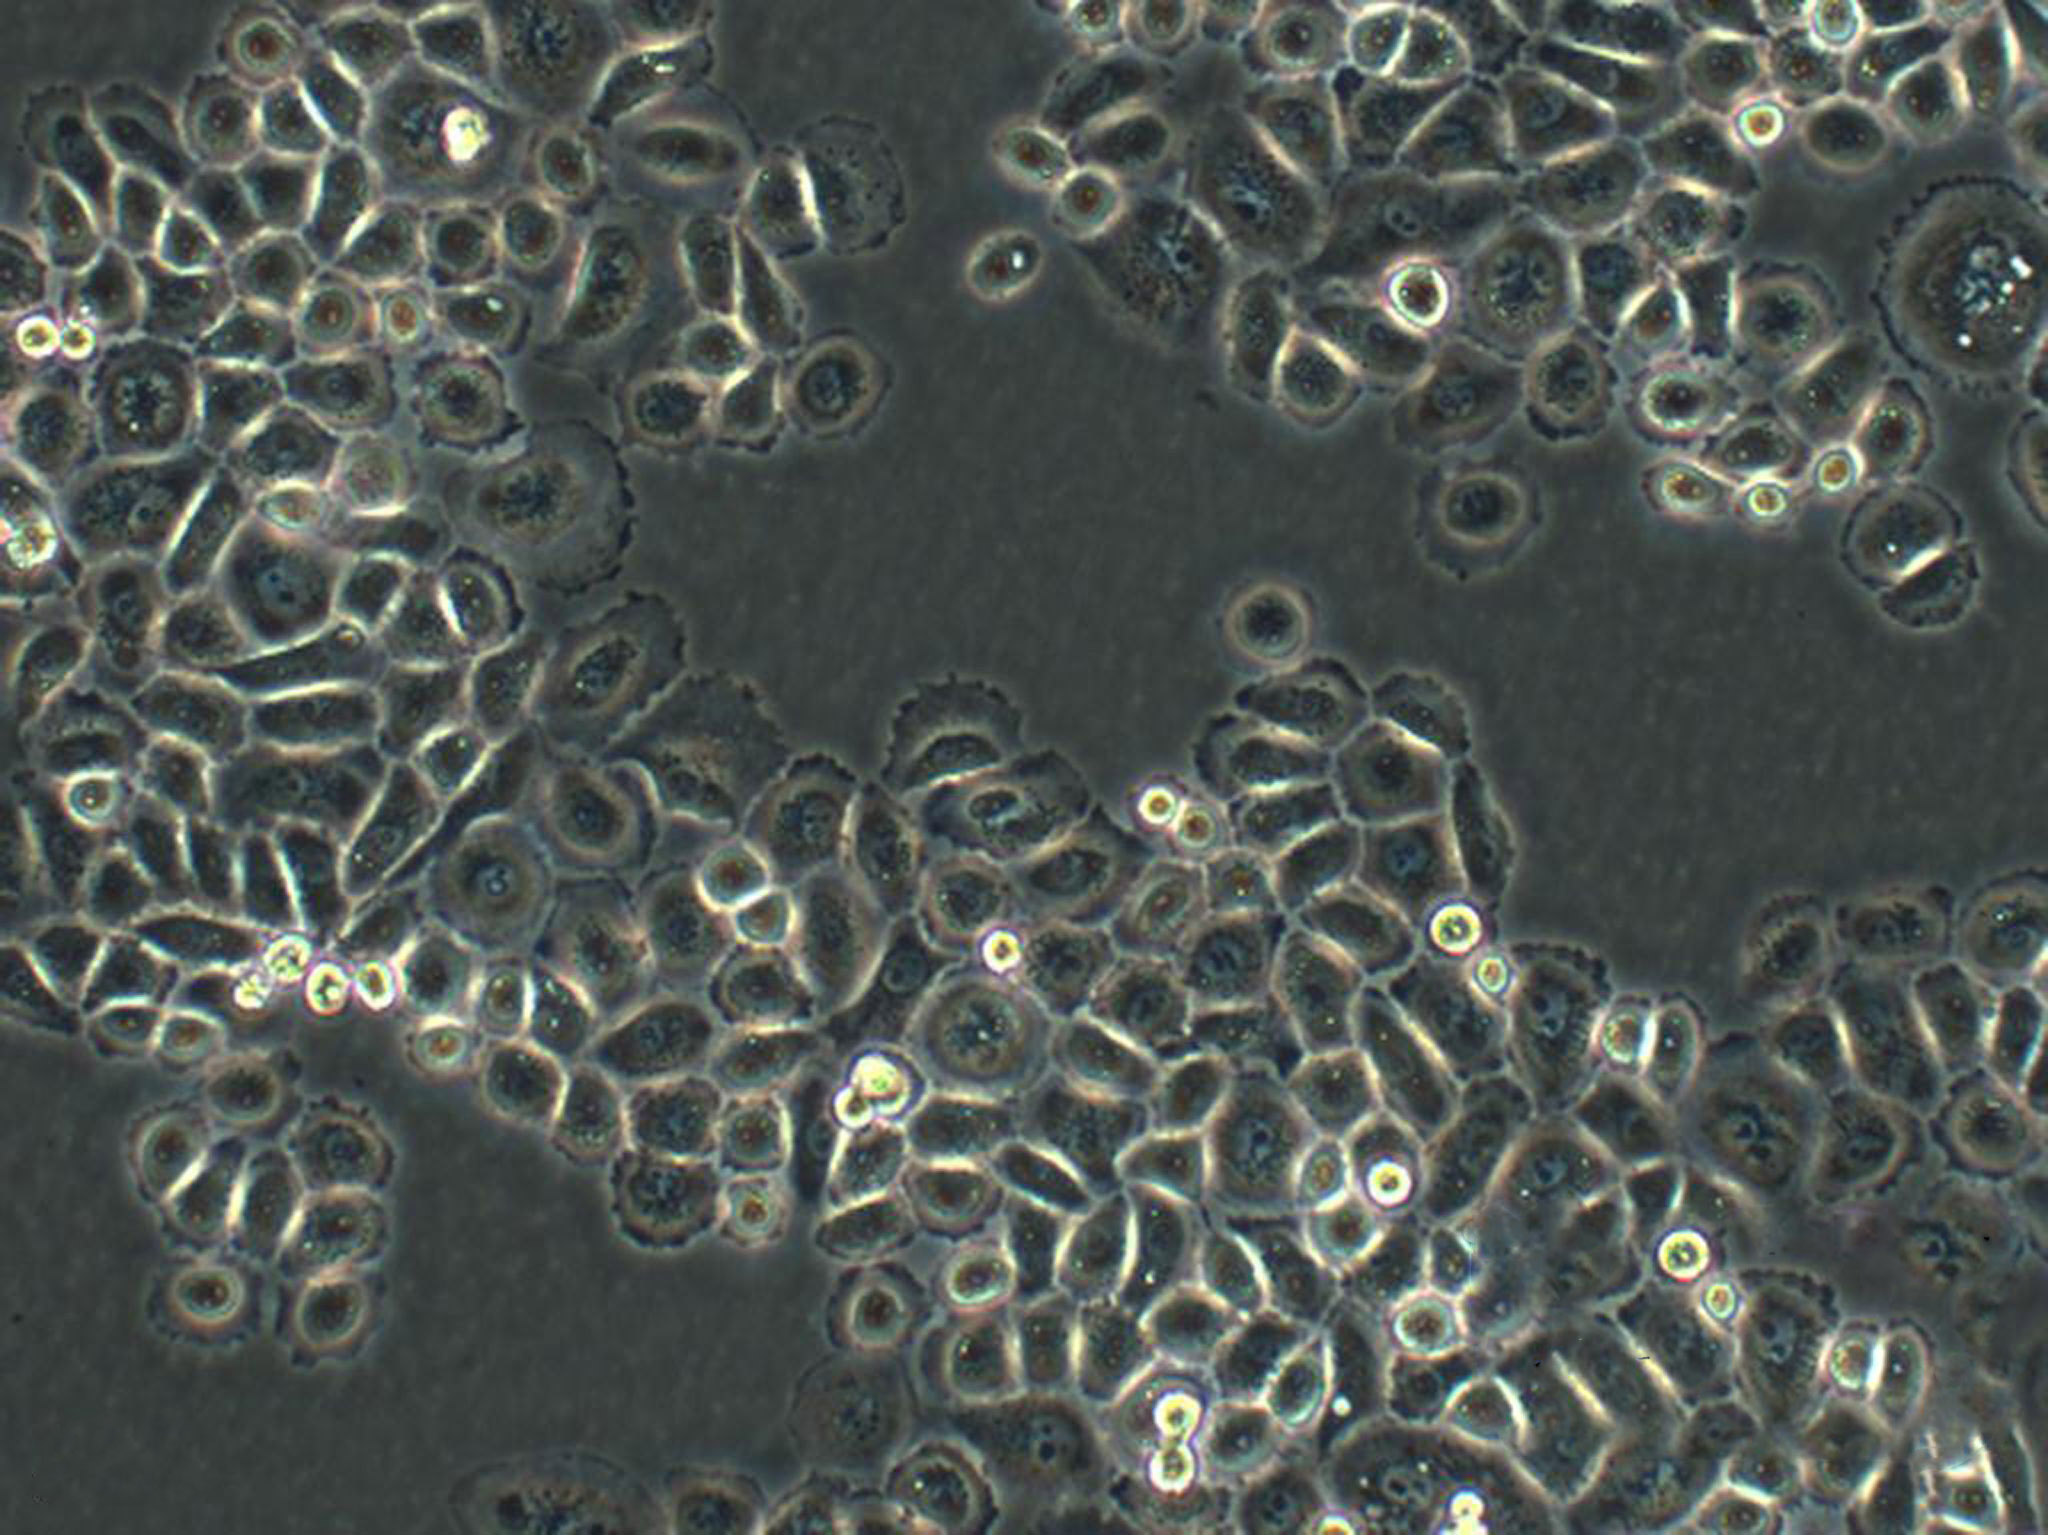 BT-549 Cells|人乳腺导管癌克隆细胞(包送STR鉴定报告),BT-549 Cells